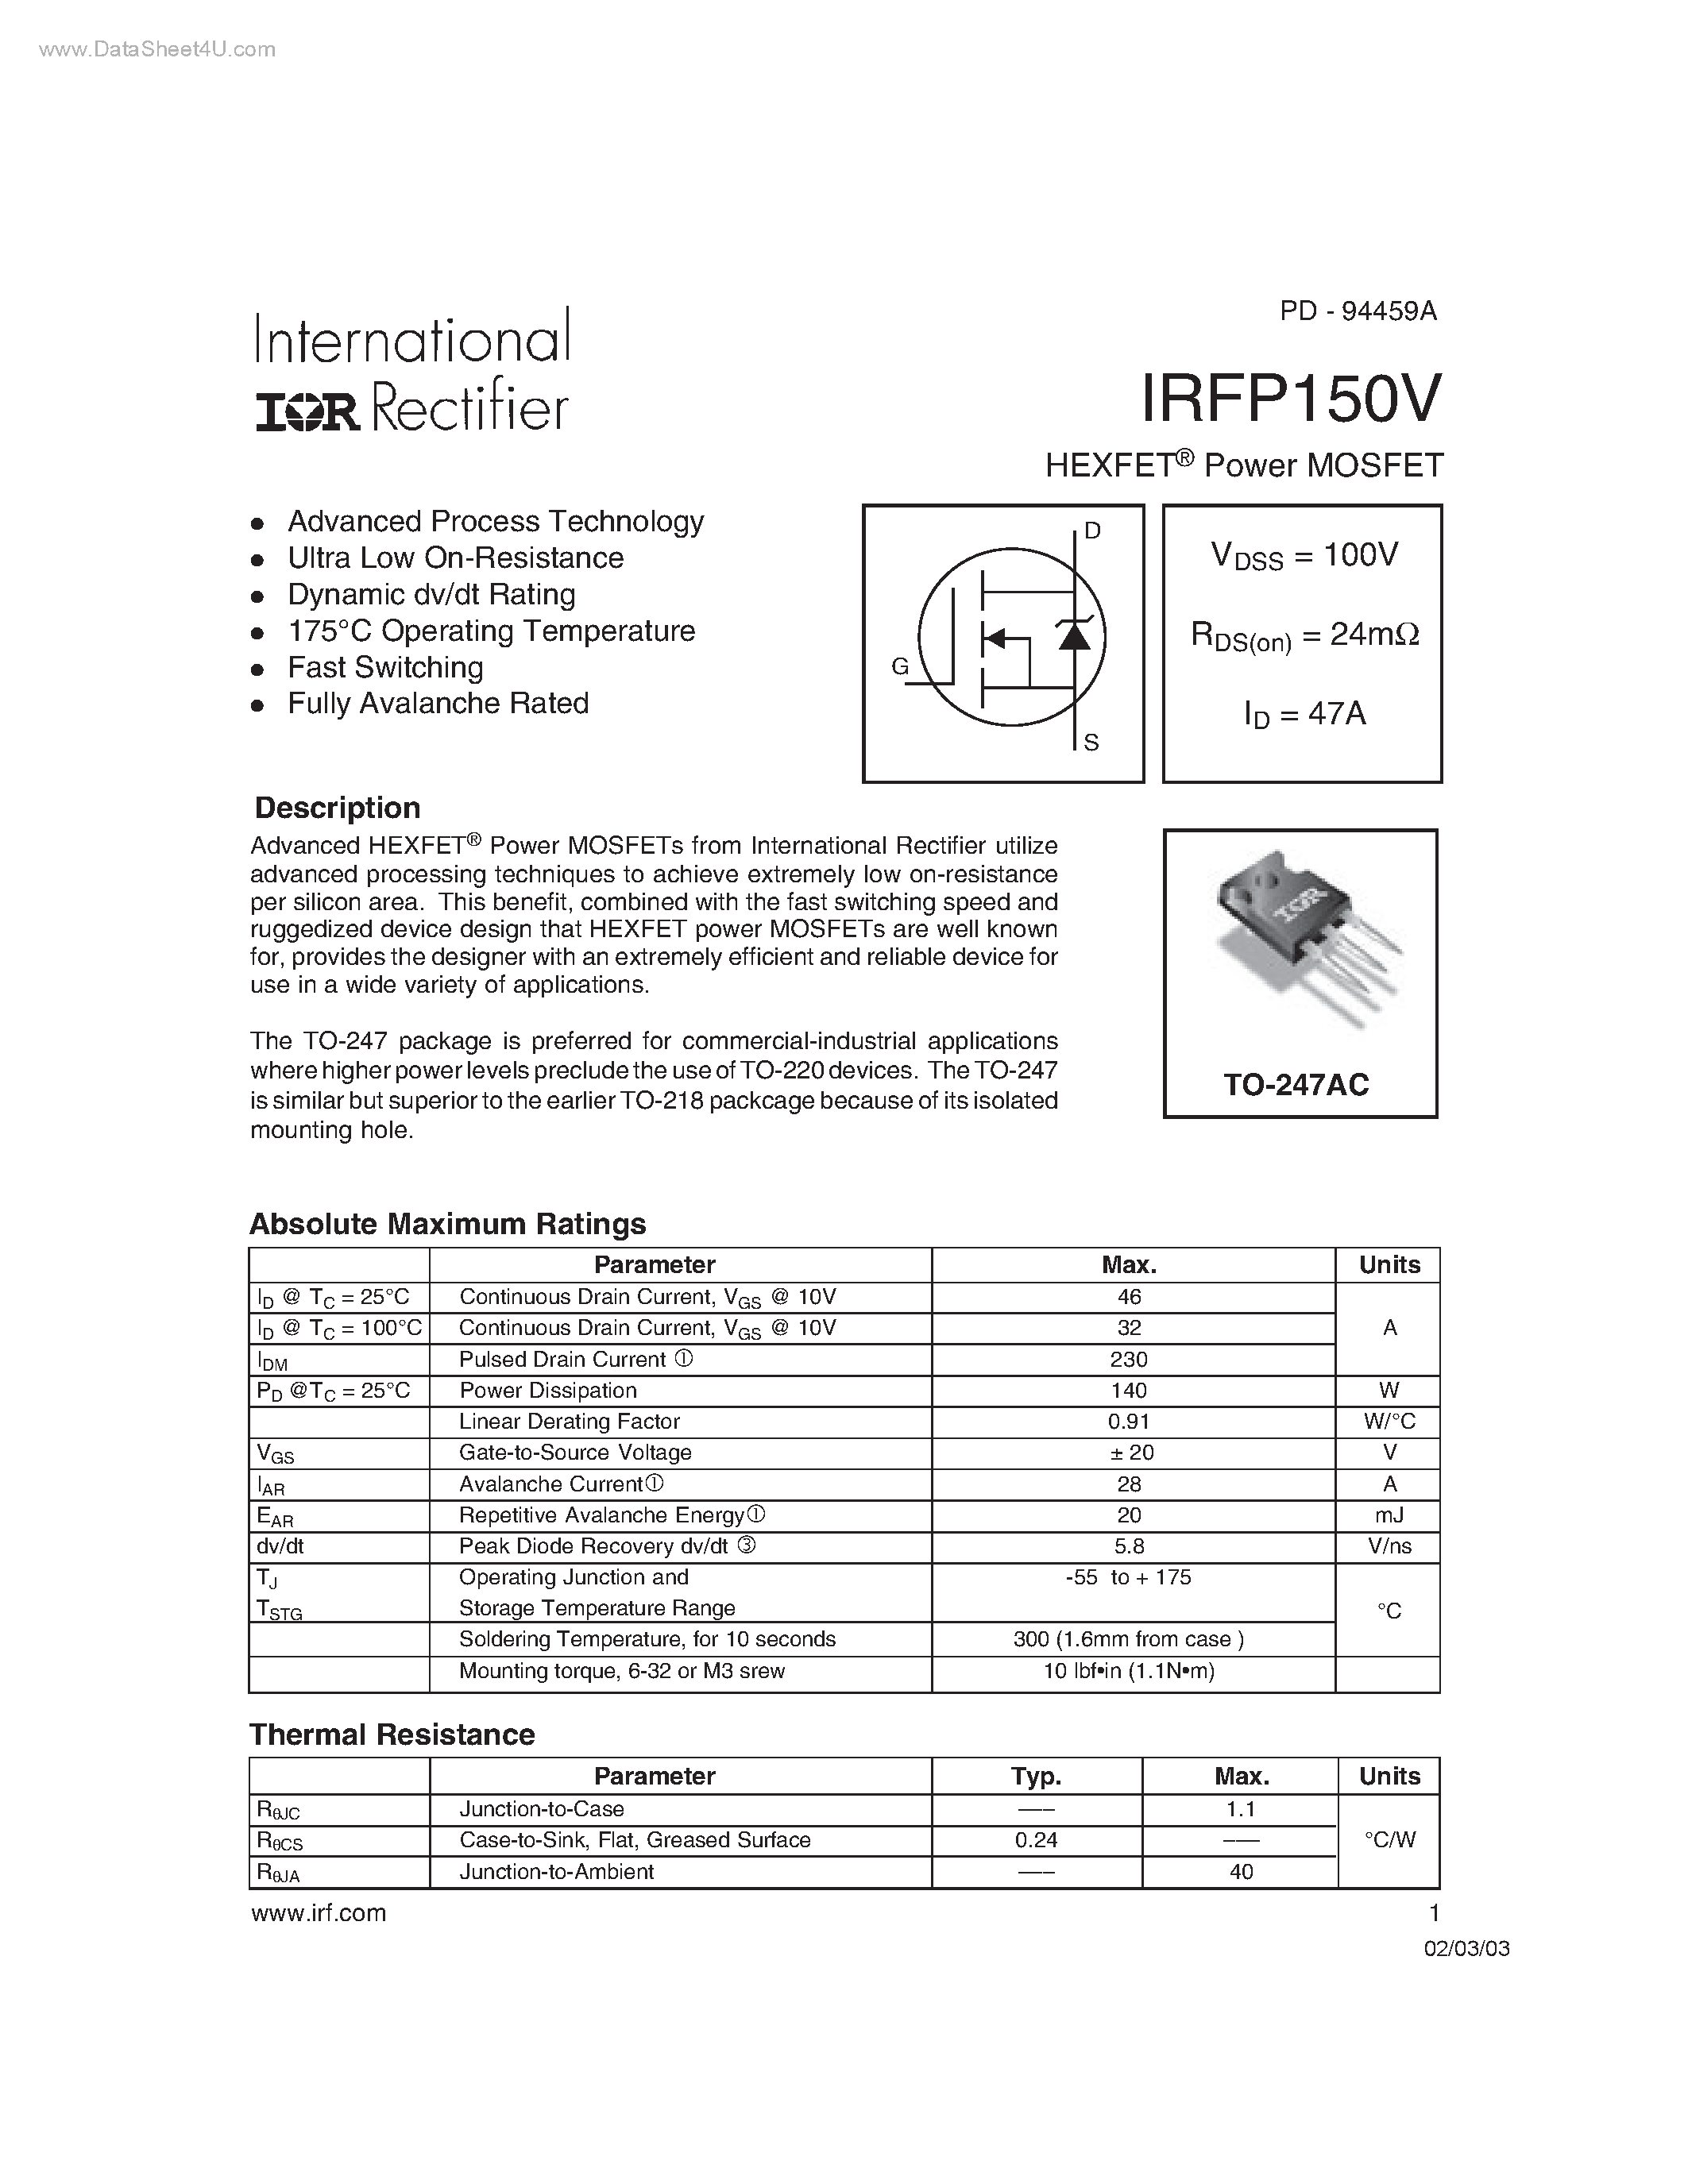 Даташит IRFP150V - HEXFET Power MOSFET страница 1